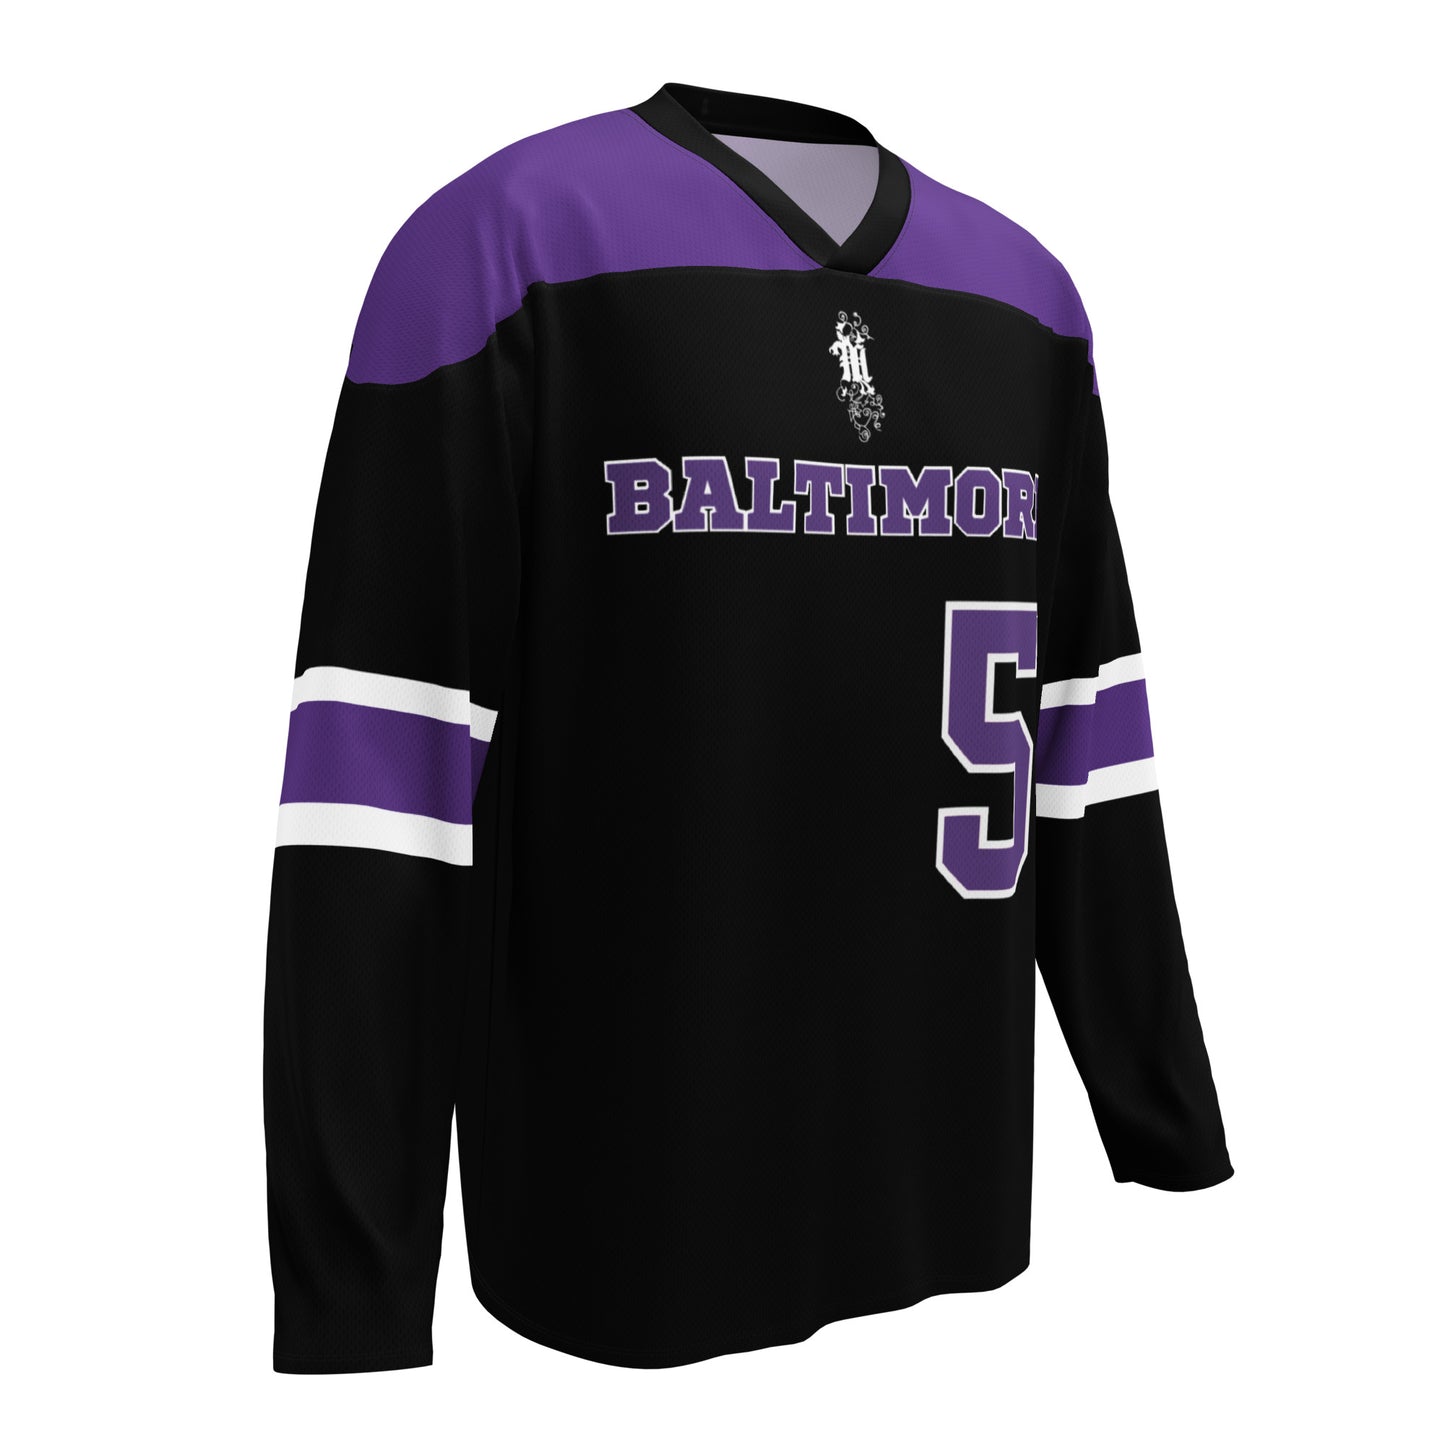 Maadish | Black Baltimore hockey jersey